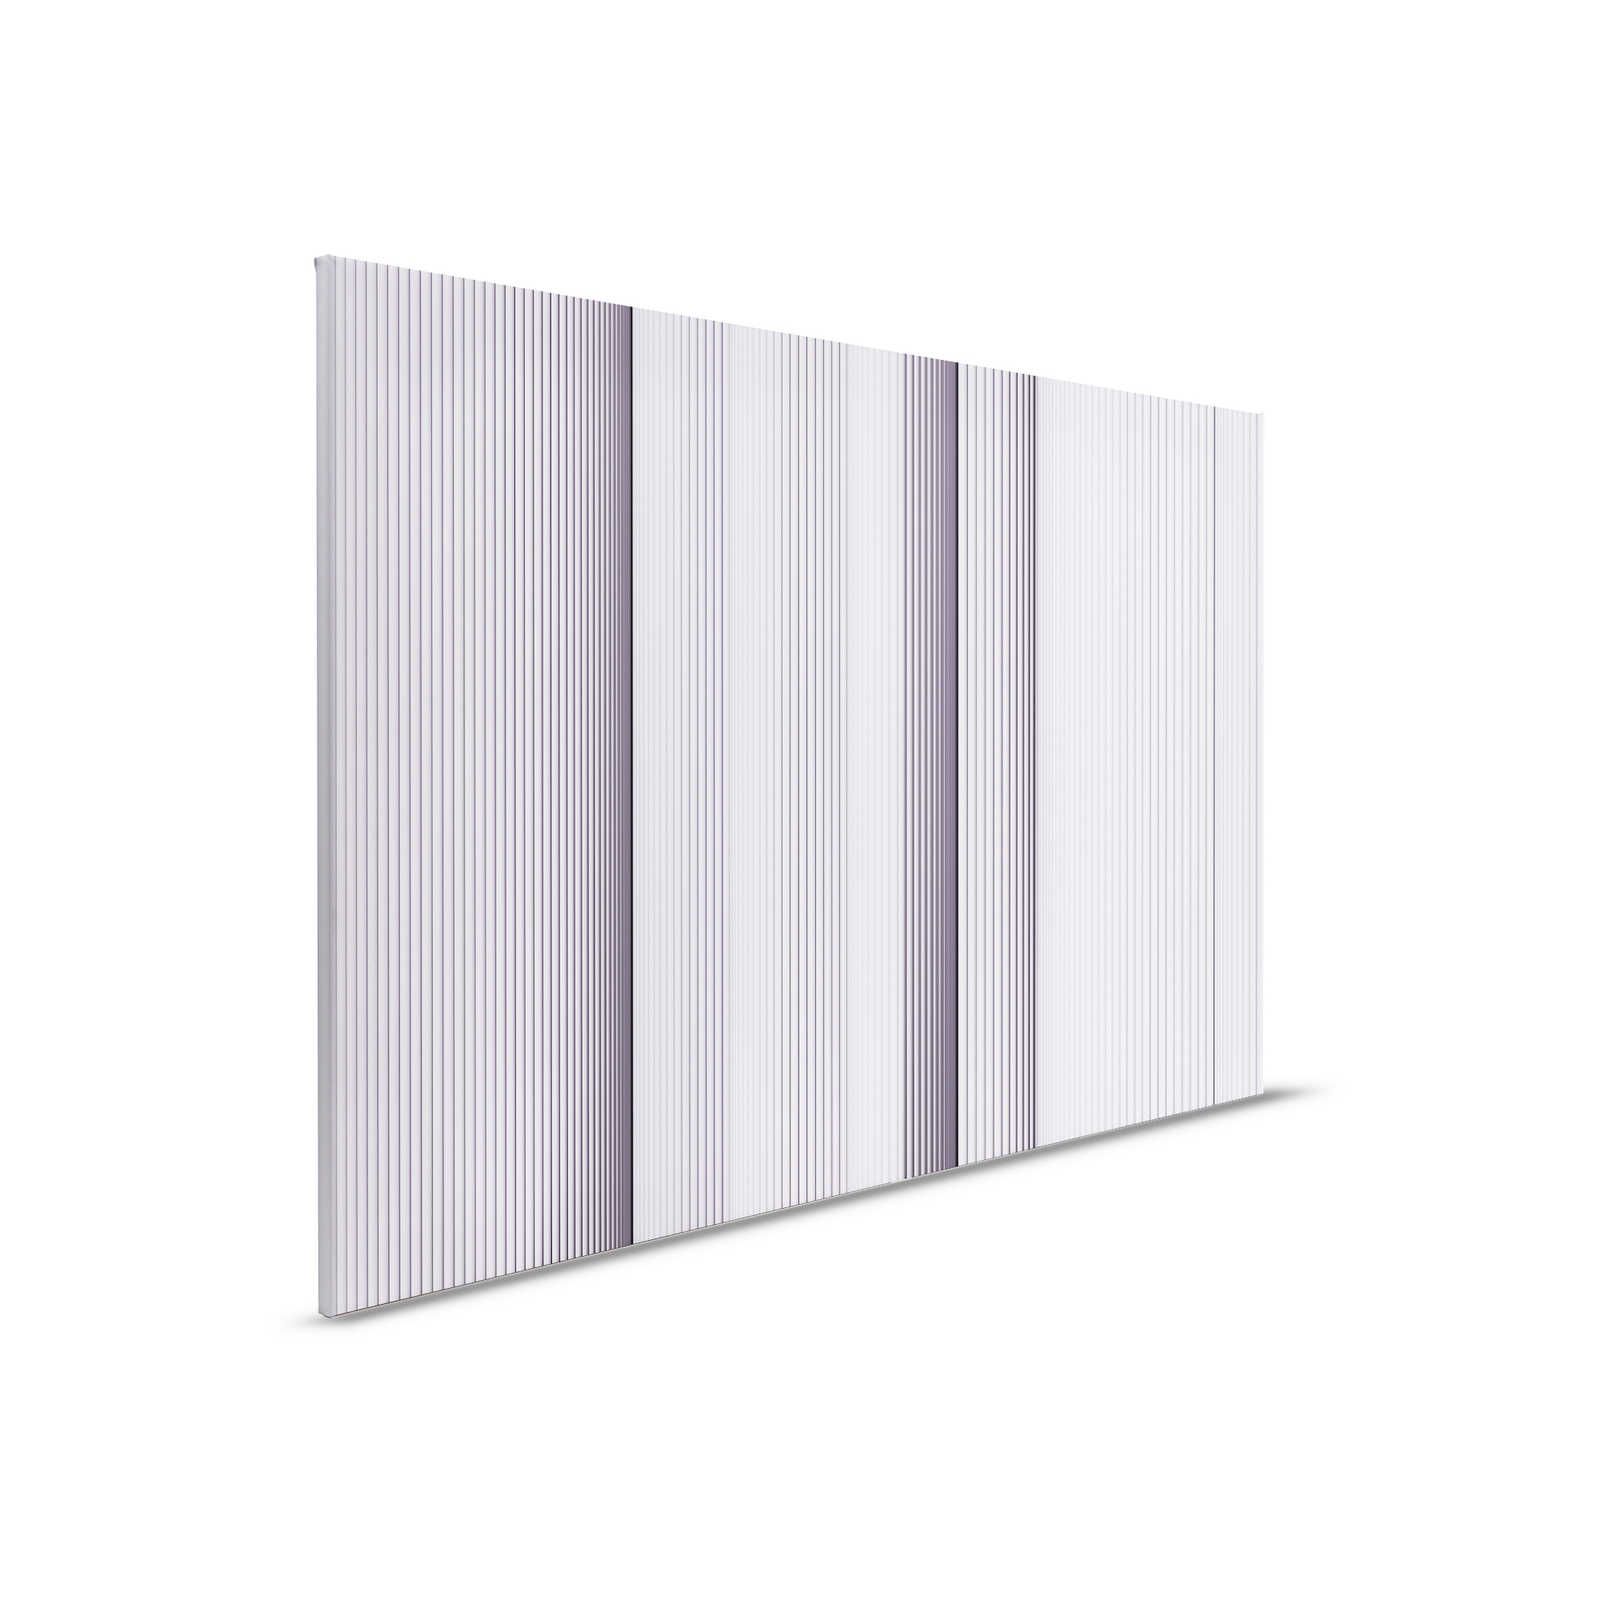         Magic Wall 1 - Streifen Leinwandbild 3D Illusion Effekt, Violett & Weiß – 0,90 m x 0,60 m
    